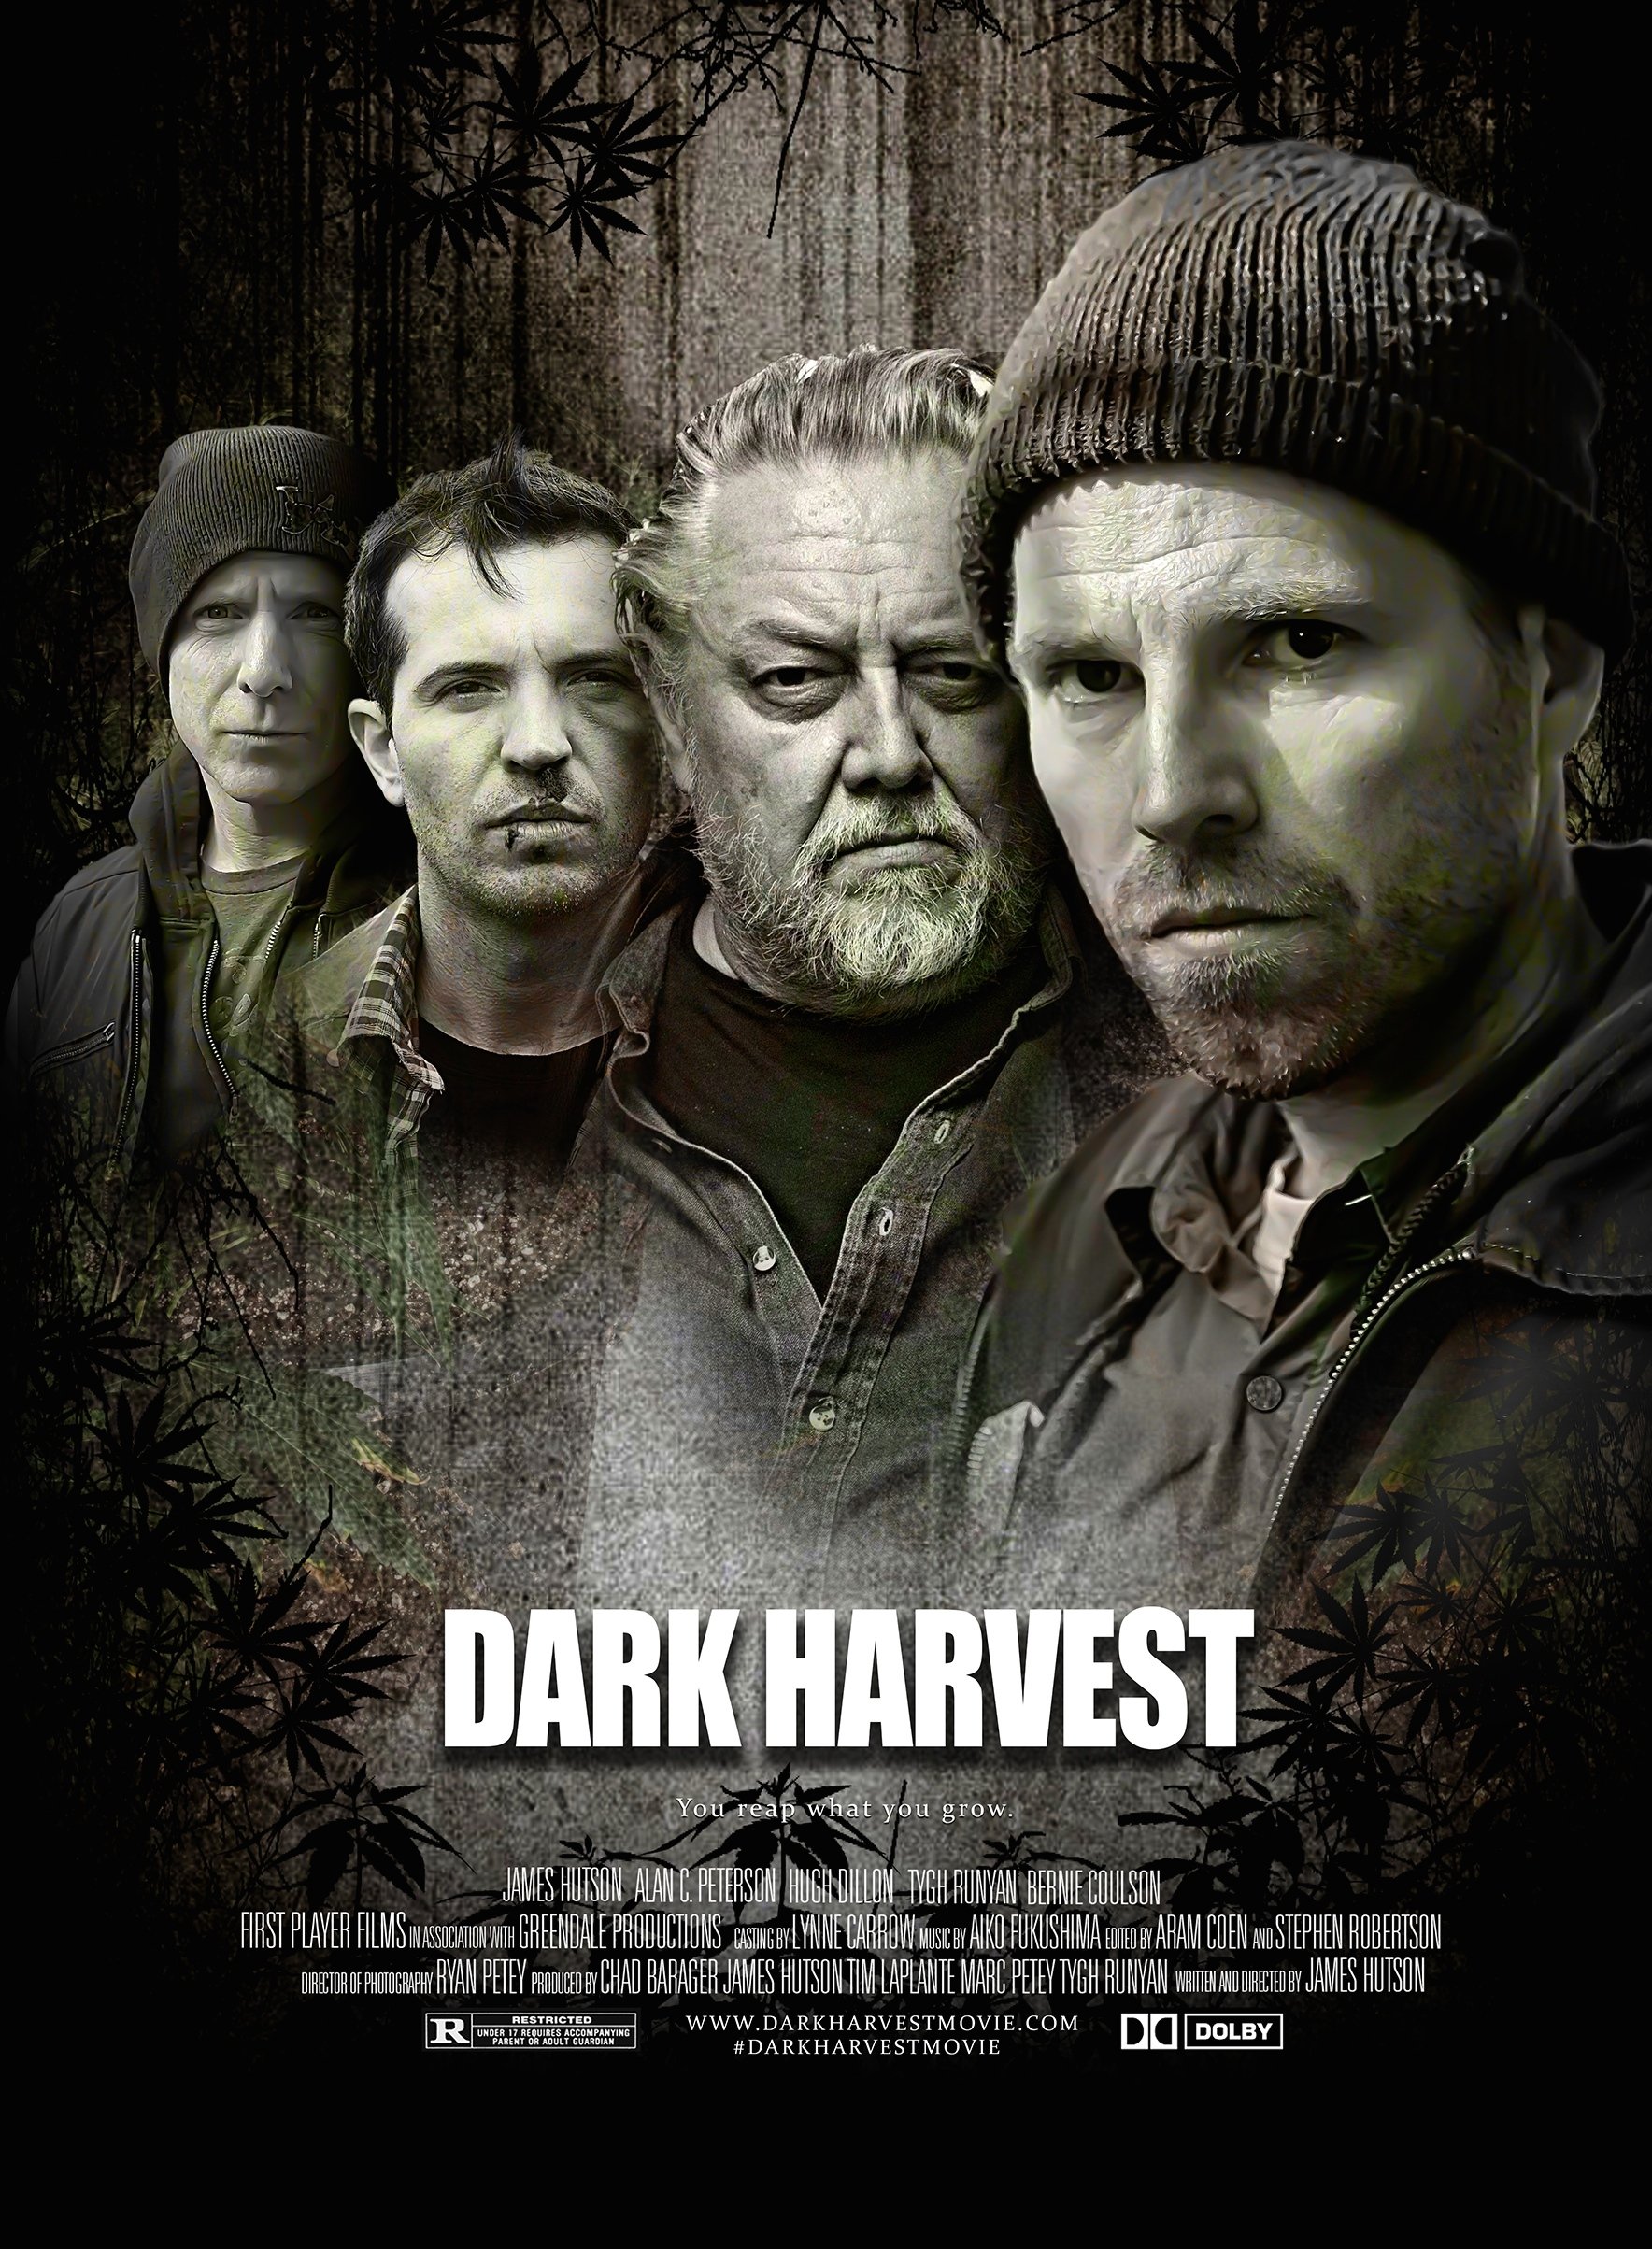 Alan C. Peterson, Hugh Dillon, James Hutson and Tygh Runyan in Dark Harvest (2015)